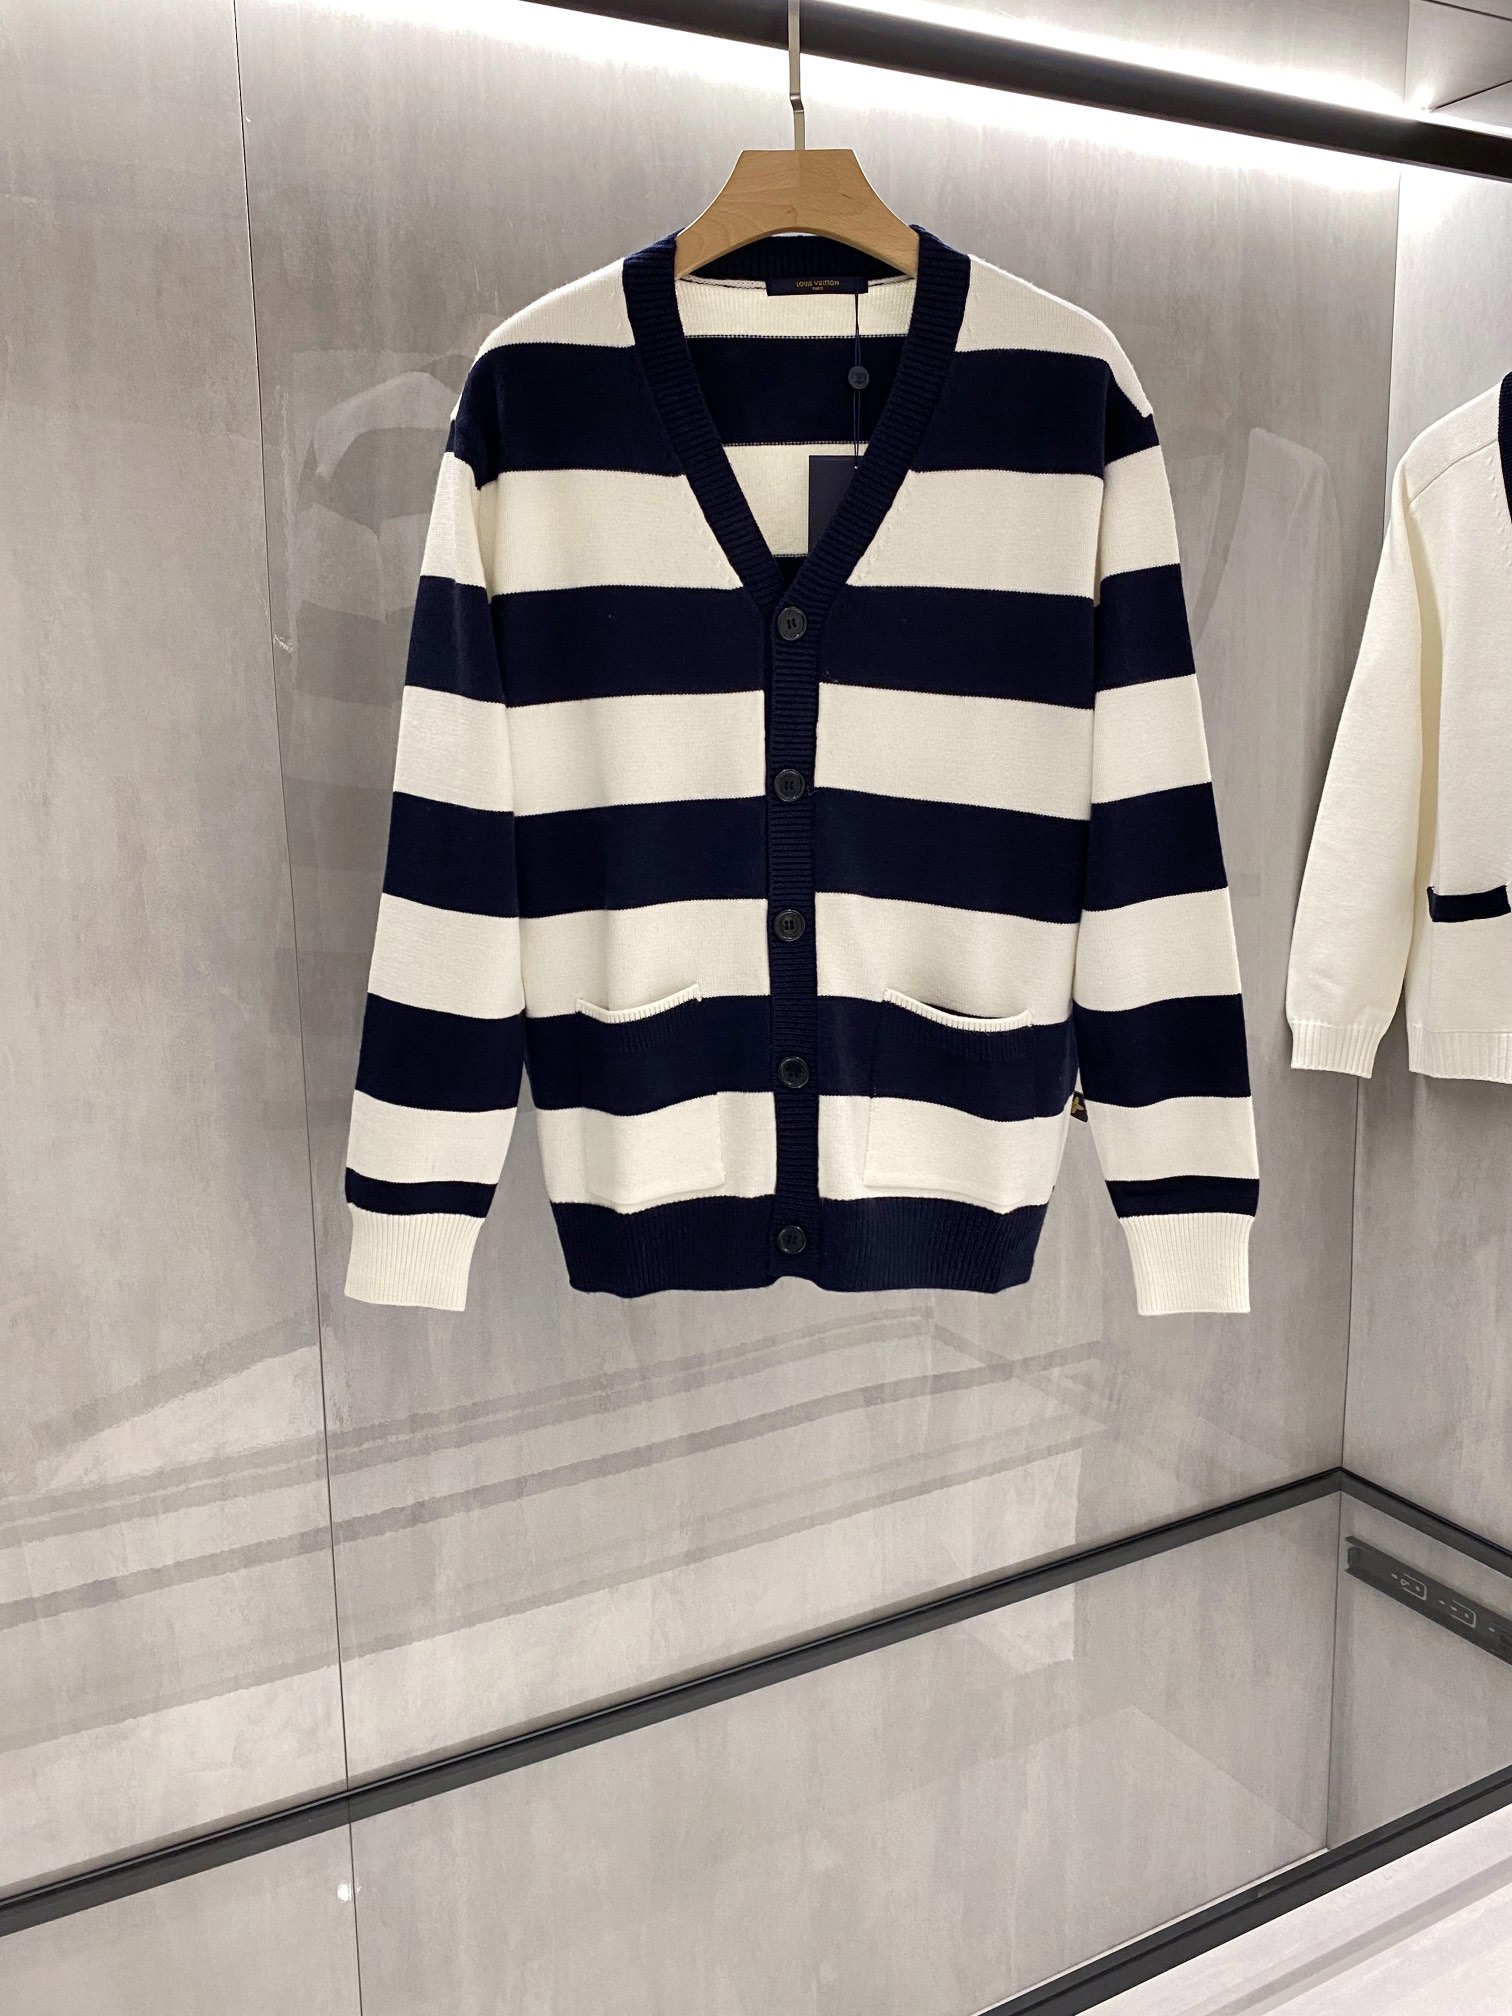 Louis Vuitton Clothing Cardigans Knit Sweater Sweatshirts Black White Weave Unisex Damier Azur Cotton Knitting Wool Spring/Fall Collection LL1670320